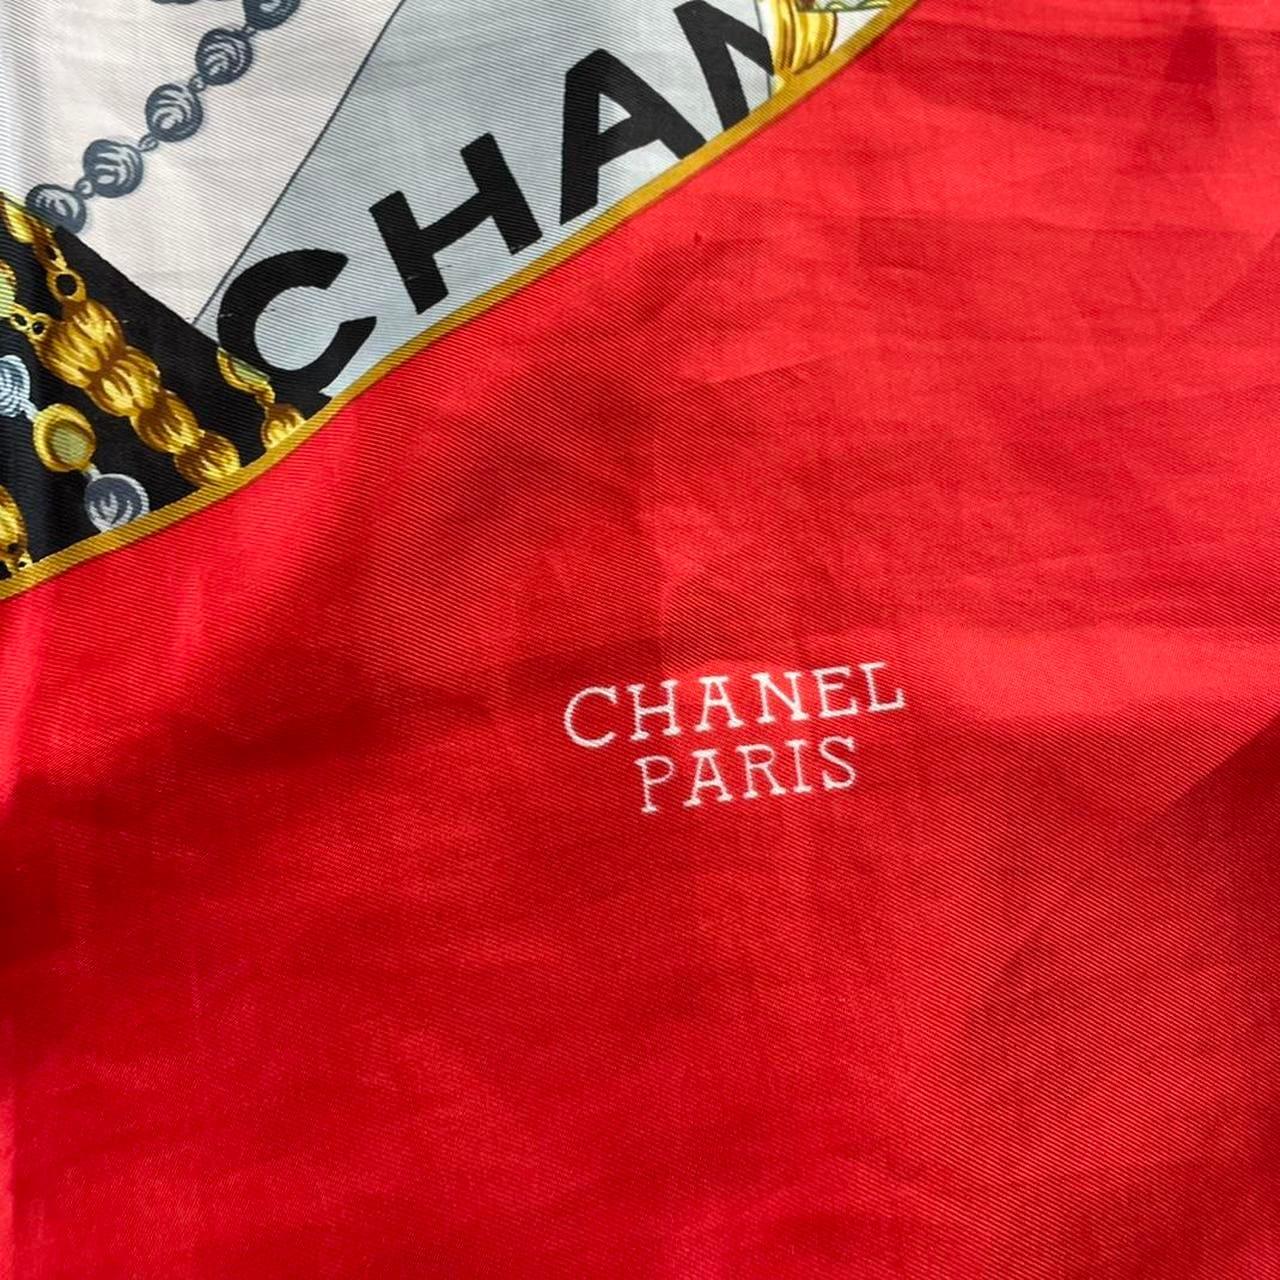 Vintage Chanel handkerchief / scarve - Known Source